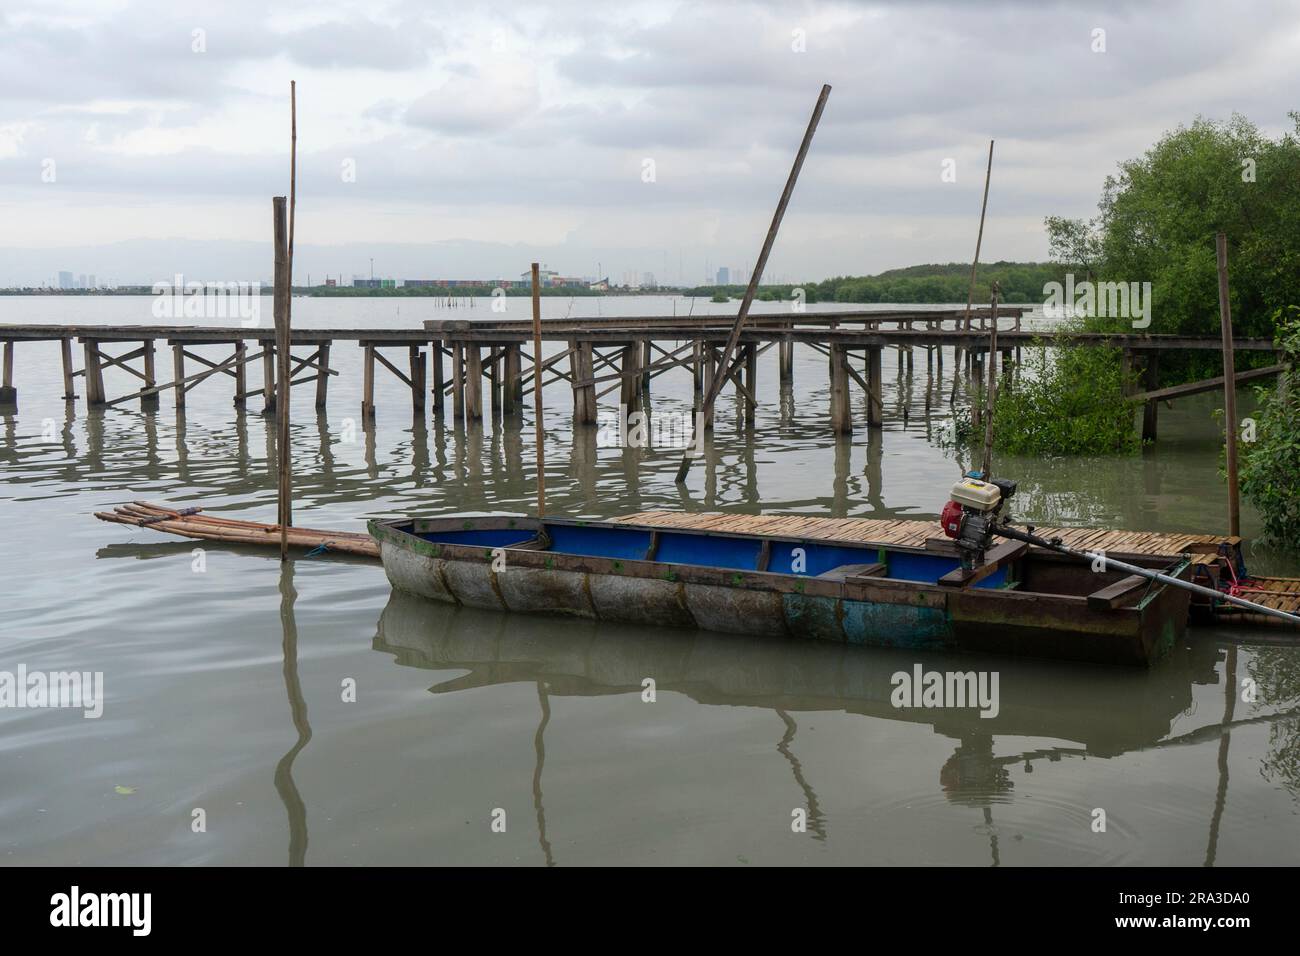 https://c8.alamy.com/comp/2RA3DA0/traditional-wooden-fishing-boat-with-motor-in-indonesia-2RA3DA0.jpg